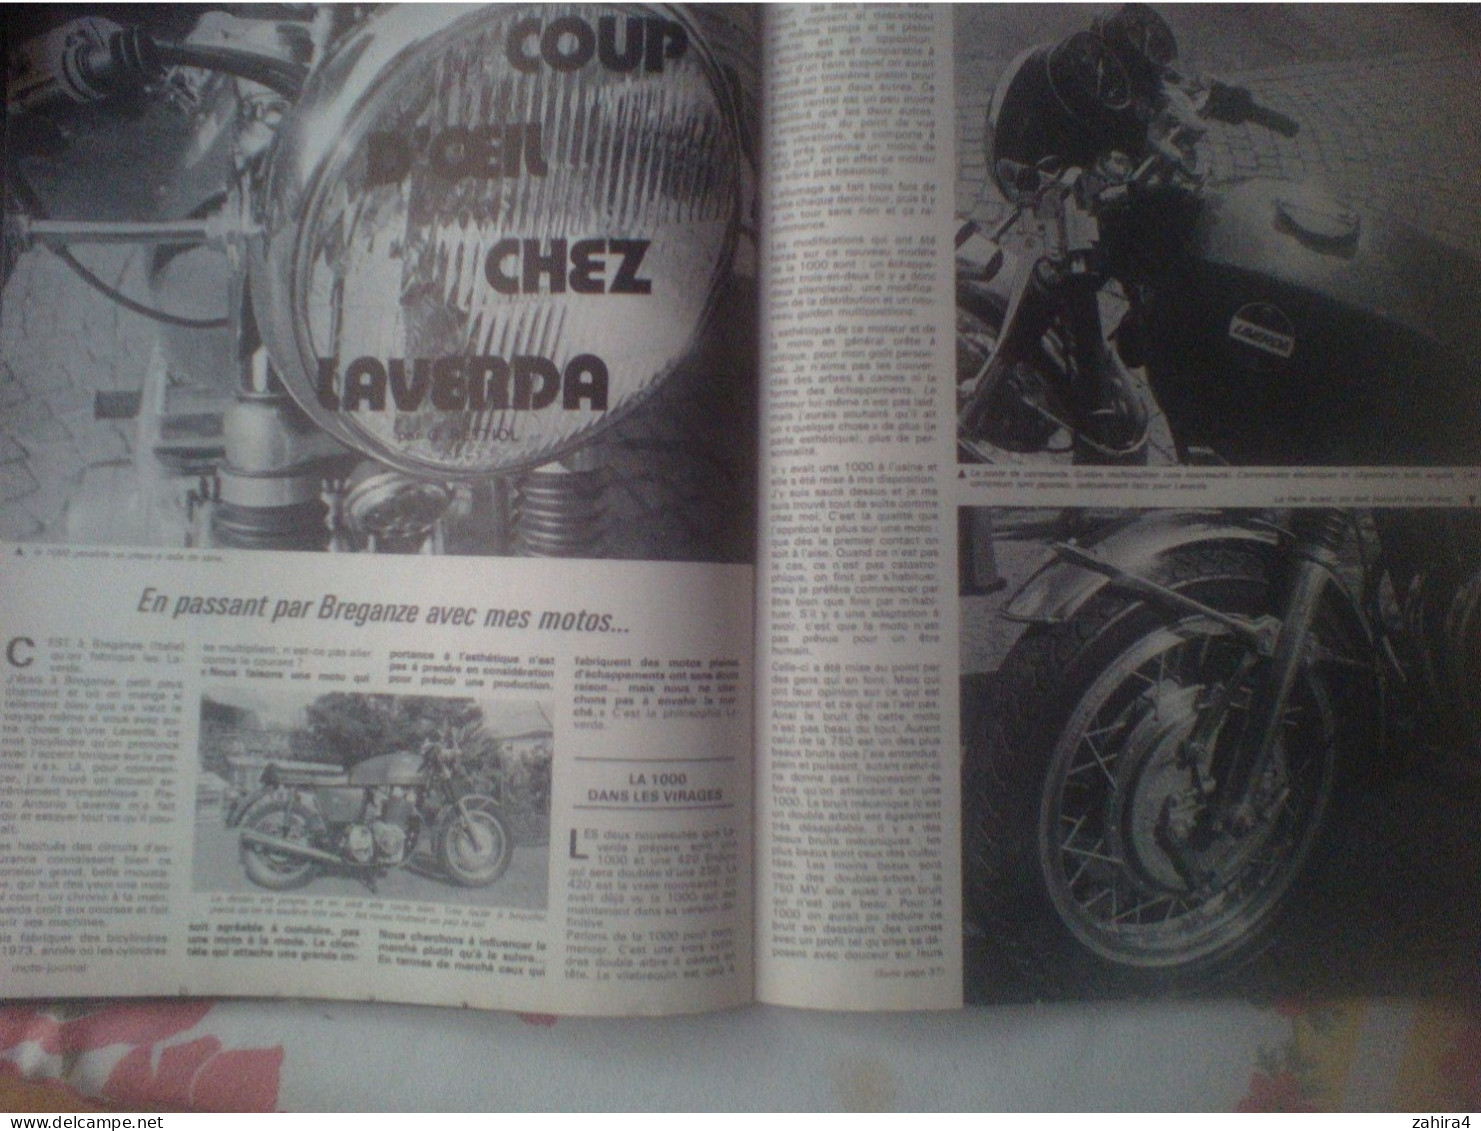 Moto journal 116 GP d France Ago Saarinen Tchernine Rudi Kurth Dane Rowe Les side & la F1 Mob 50 Vespa bravo Laverda Nue